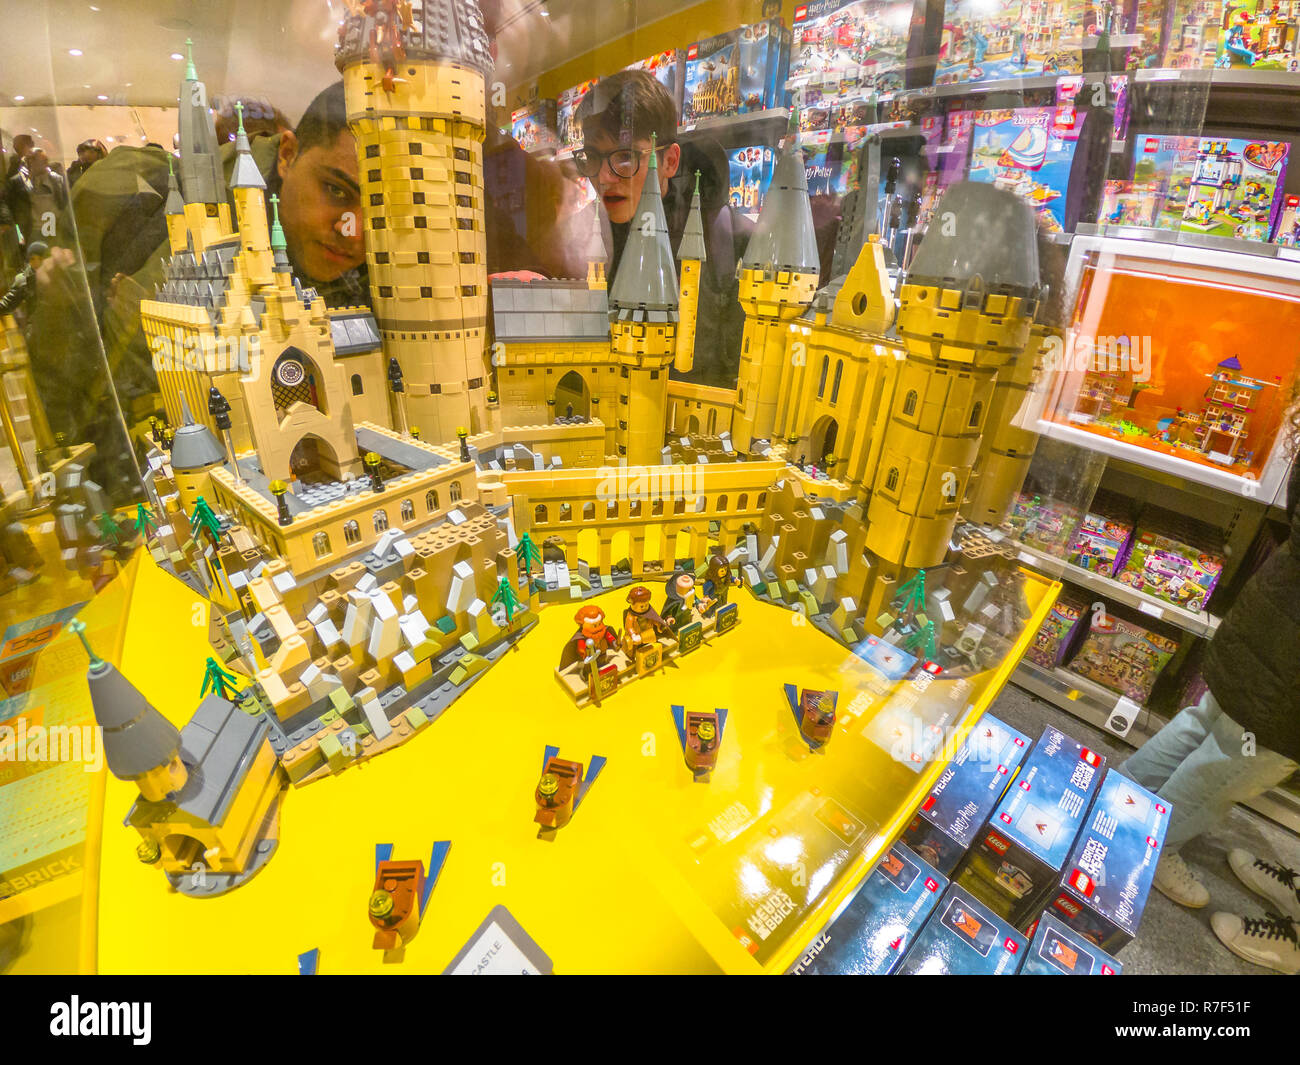 Lego Harry Potter Stock Photos - Free & Royalty-Free Stock Photos